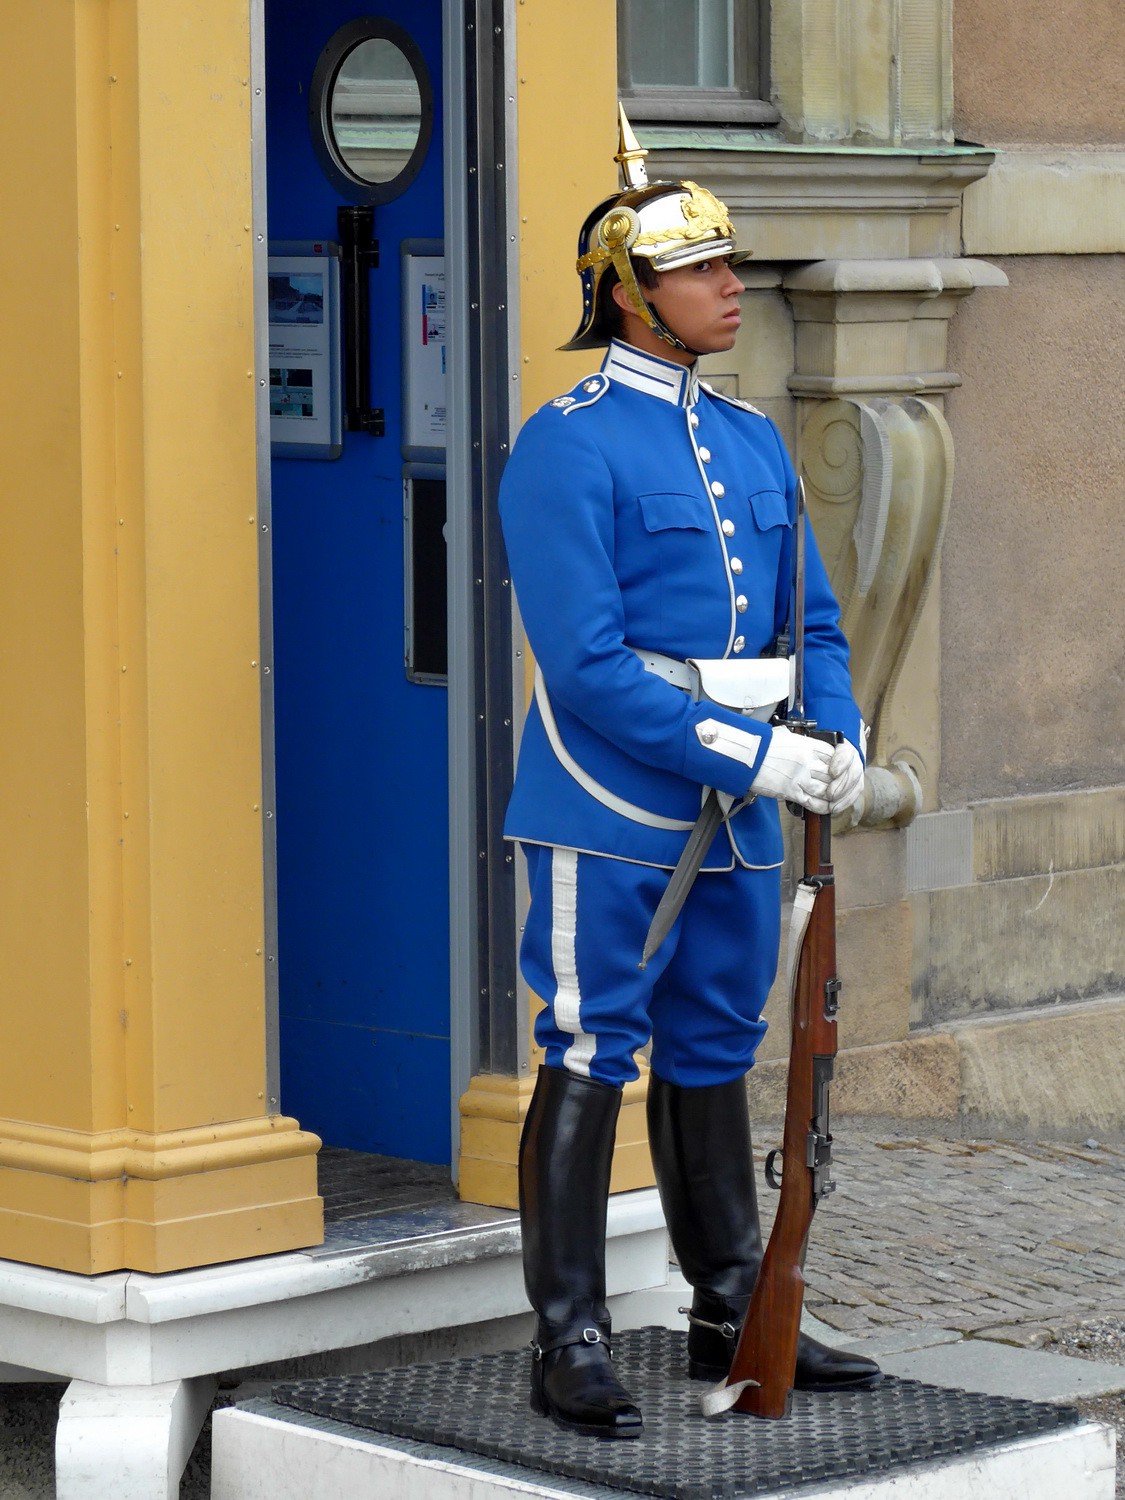 Guard of the Kungliga Slottet - Royal Castle